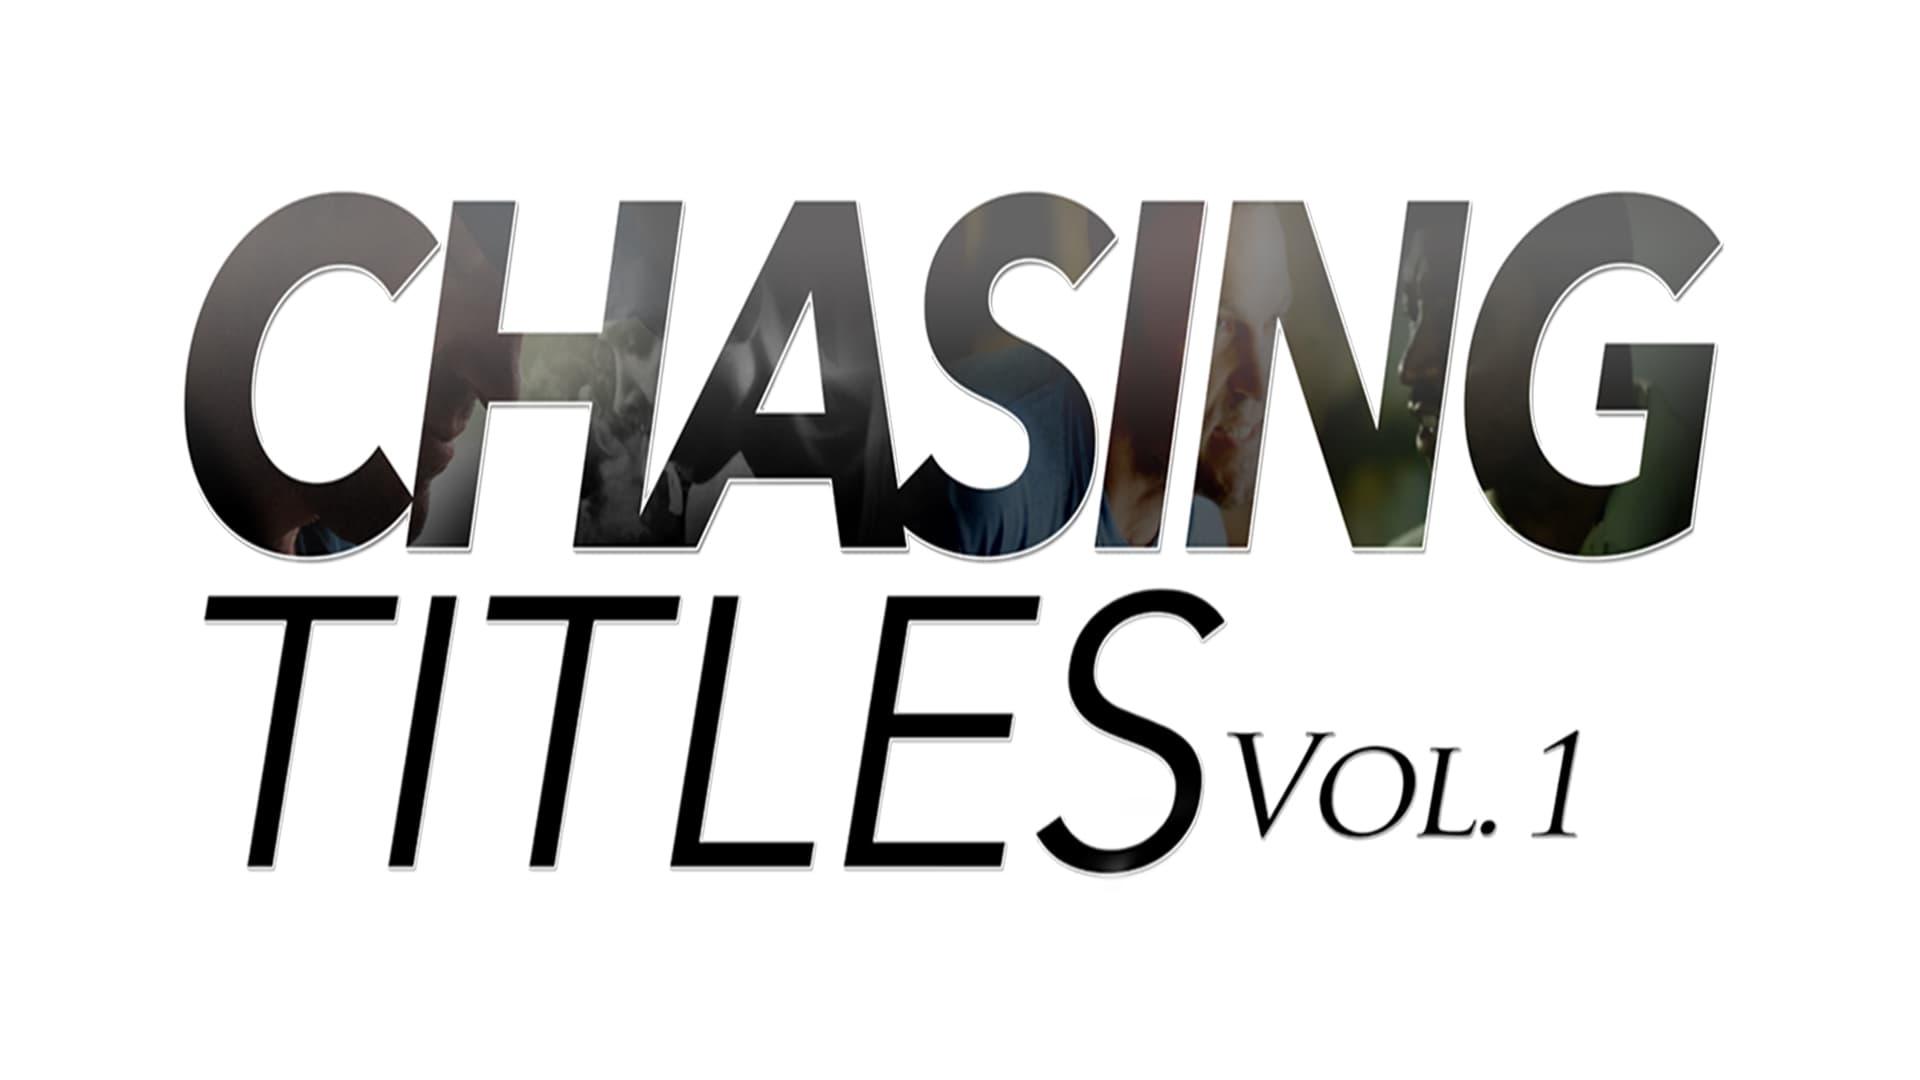 Chasing Titles Vol. 1 backdrop